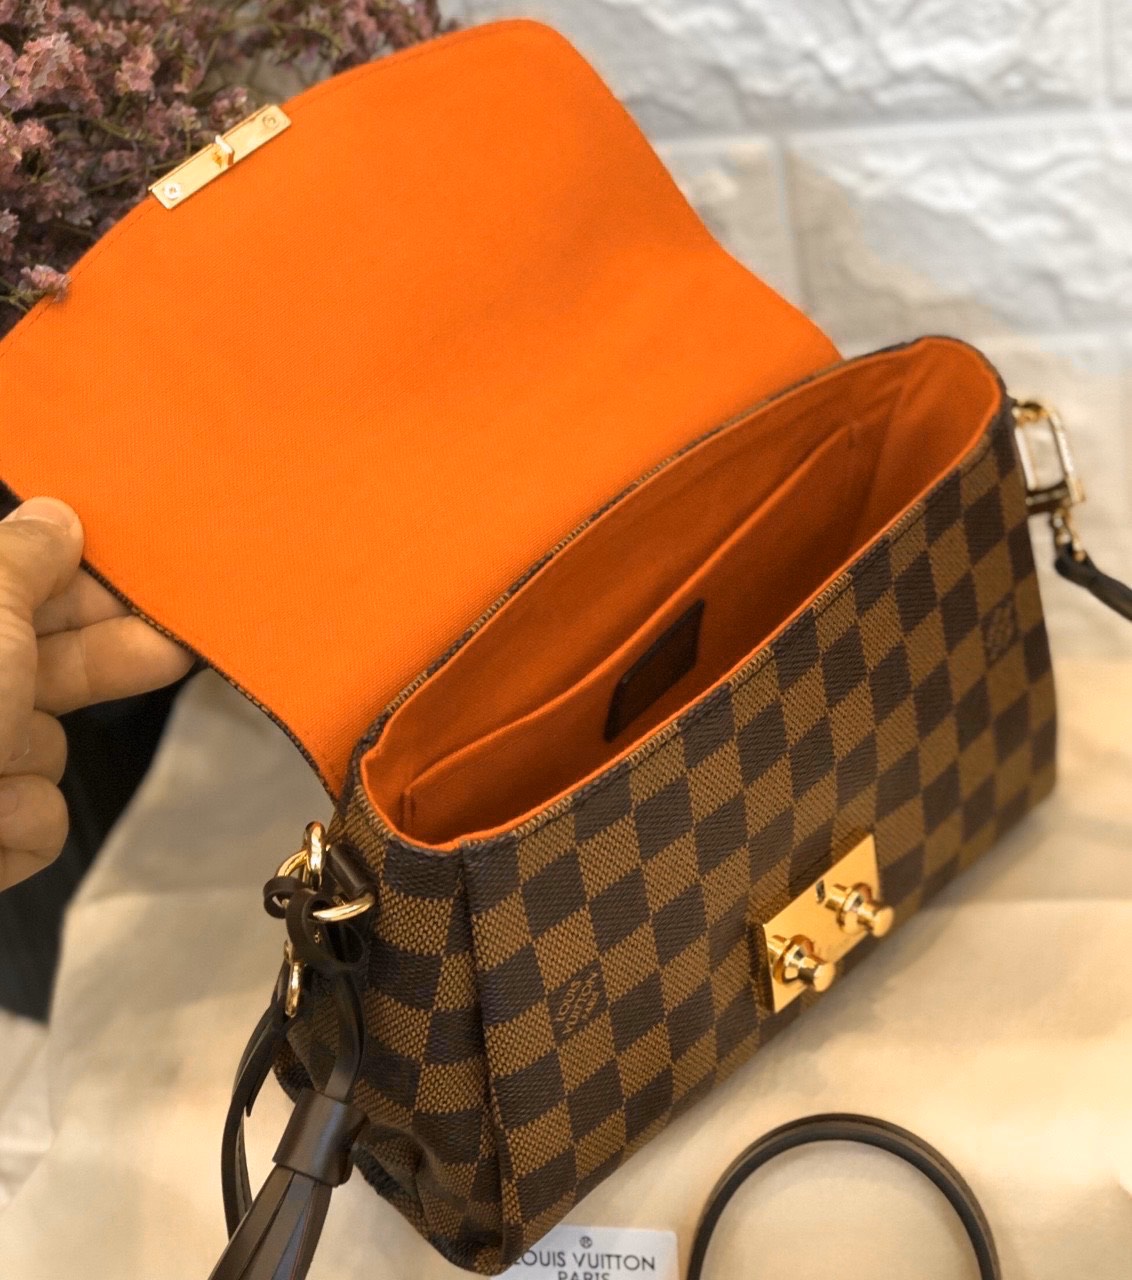 Túi xách nữ hàng hiệu LV Louis Vuitton VIP91 - LOUIS KIMMI